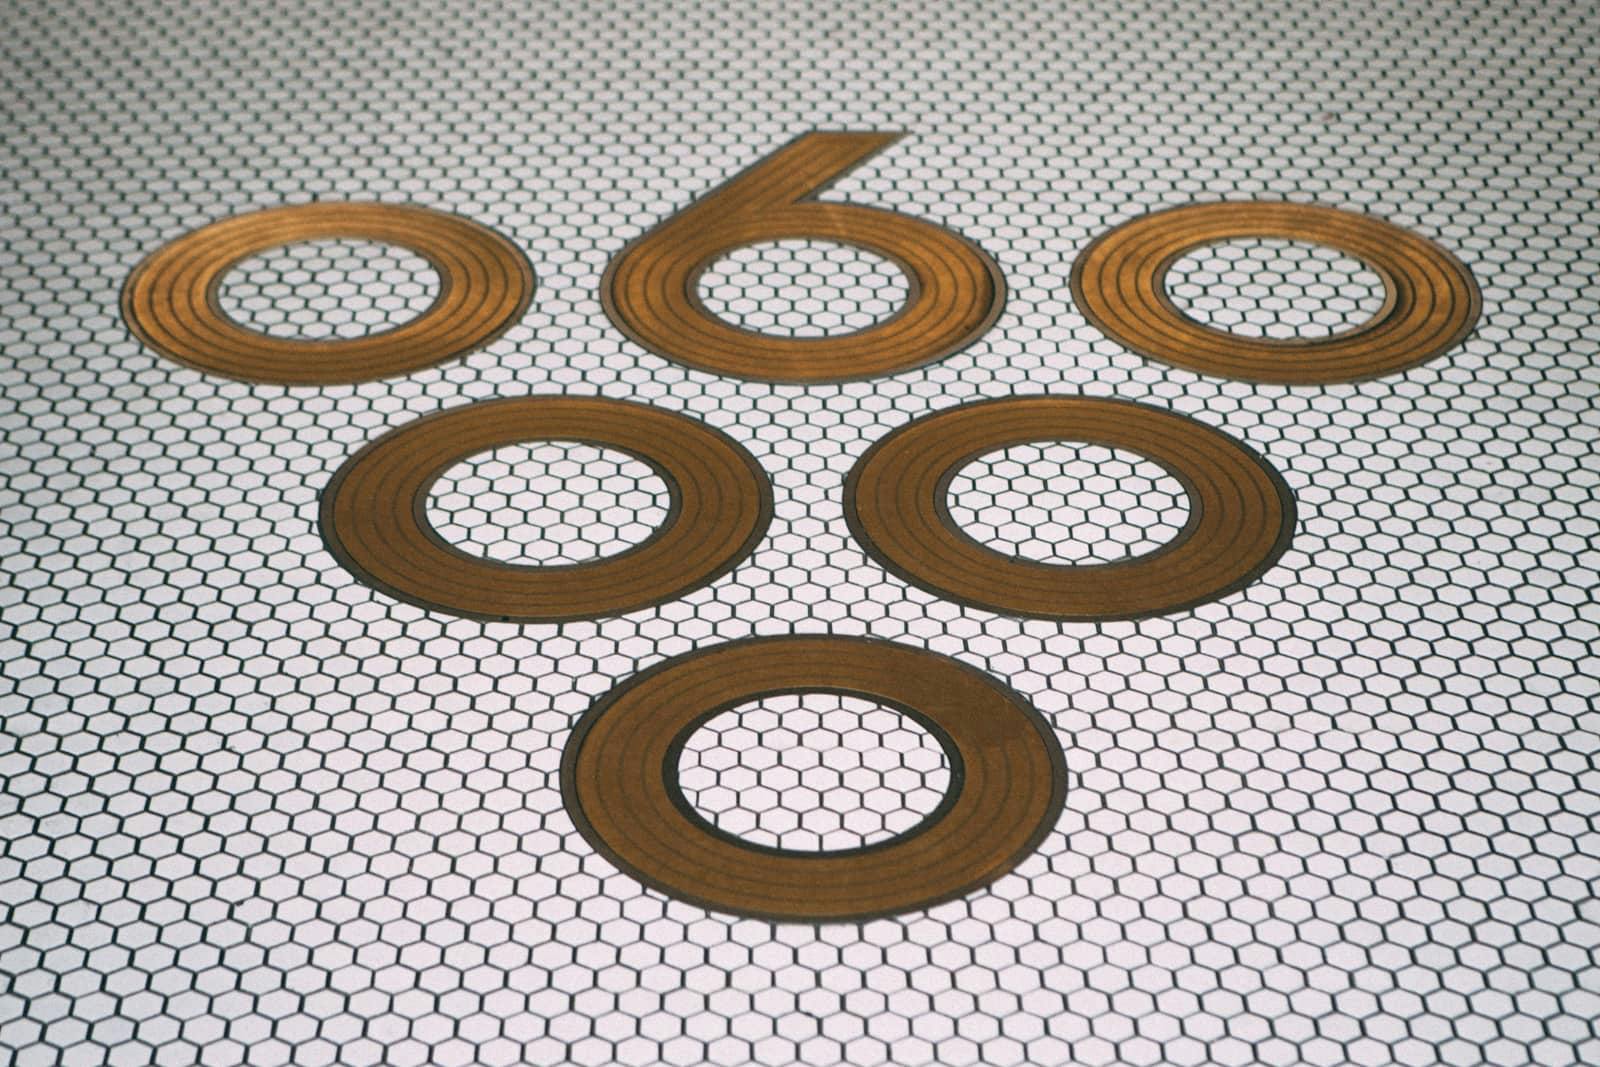 Sixty Vines logo on a tiled floor